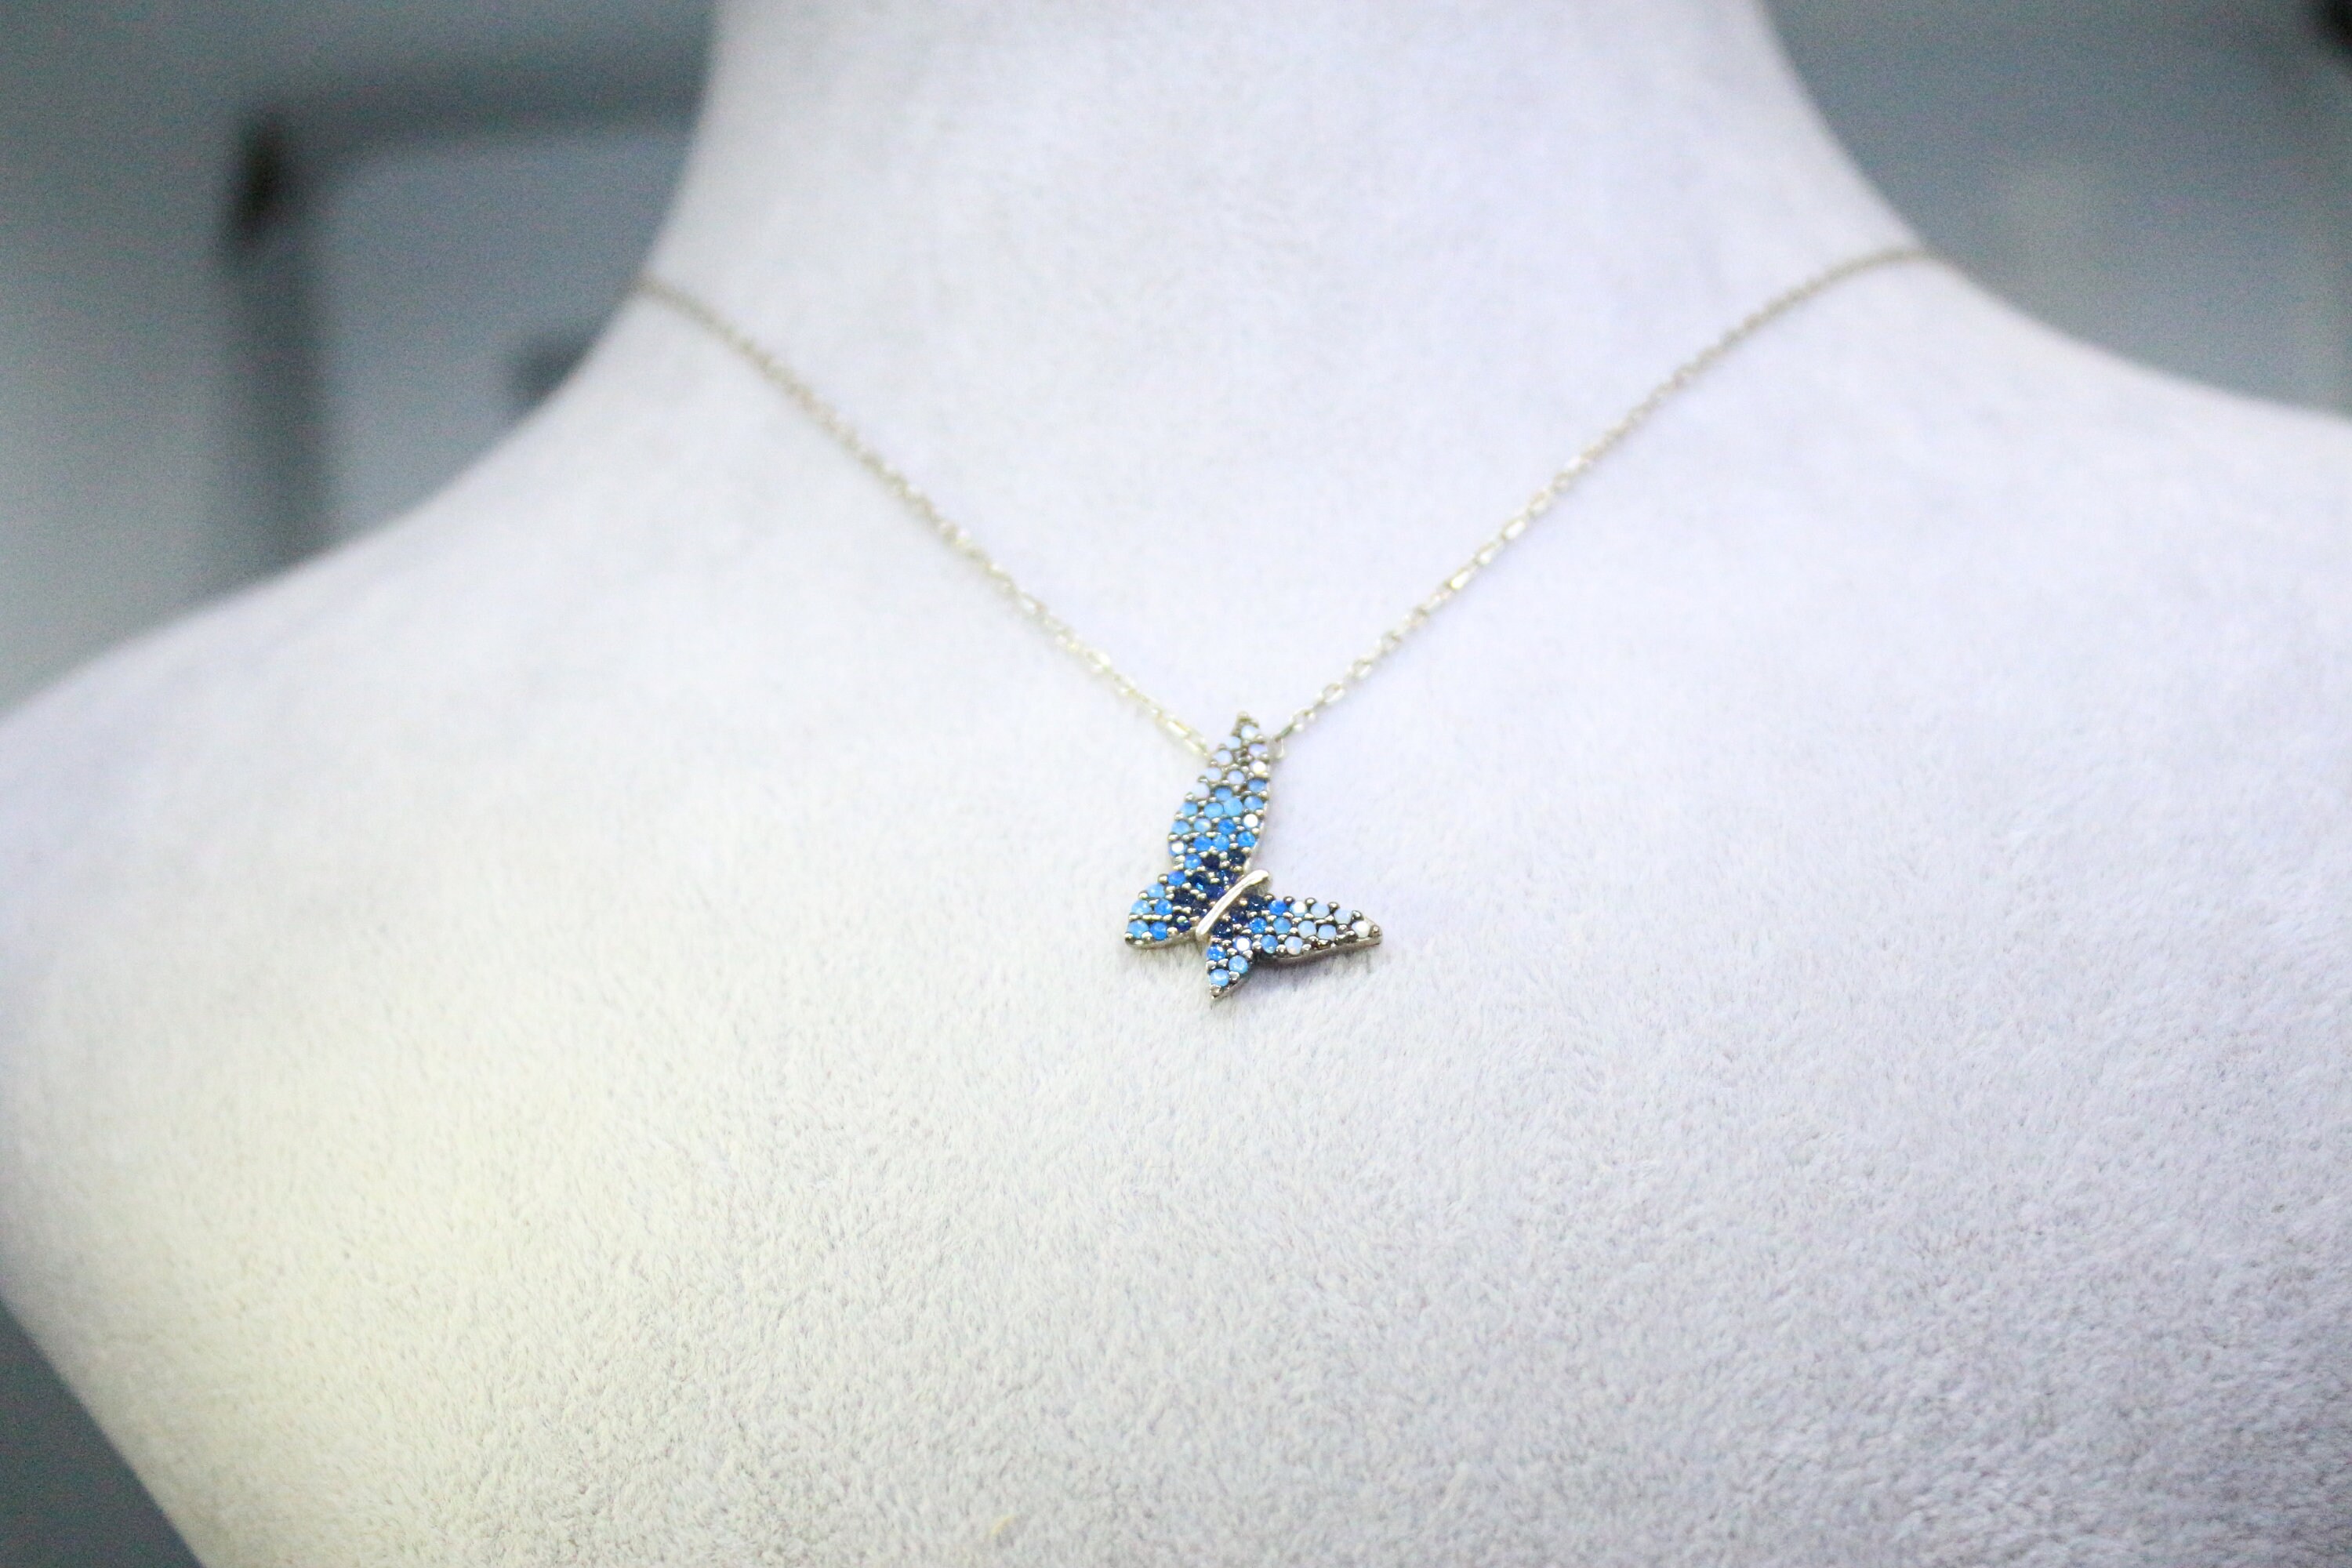 Blue Butterfly Silver Necklace Blue zircon pendant dainty | Etsy